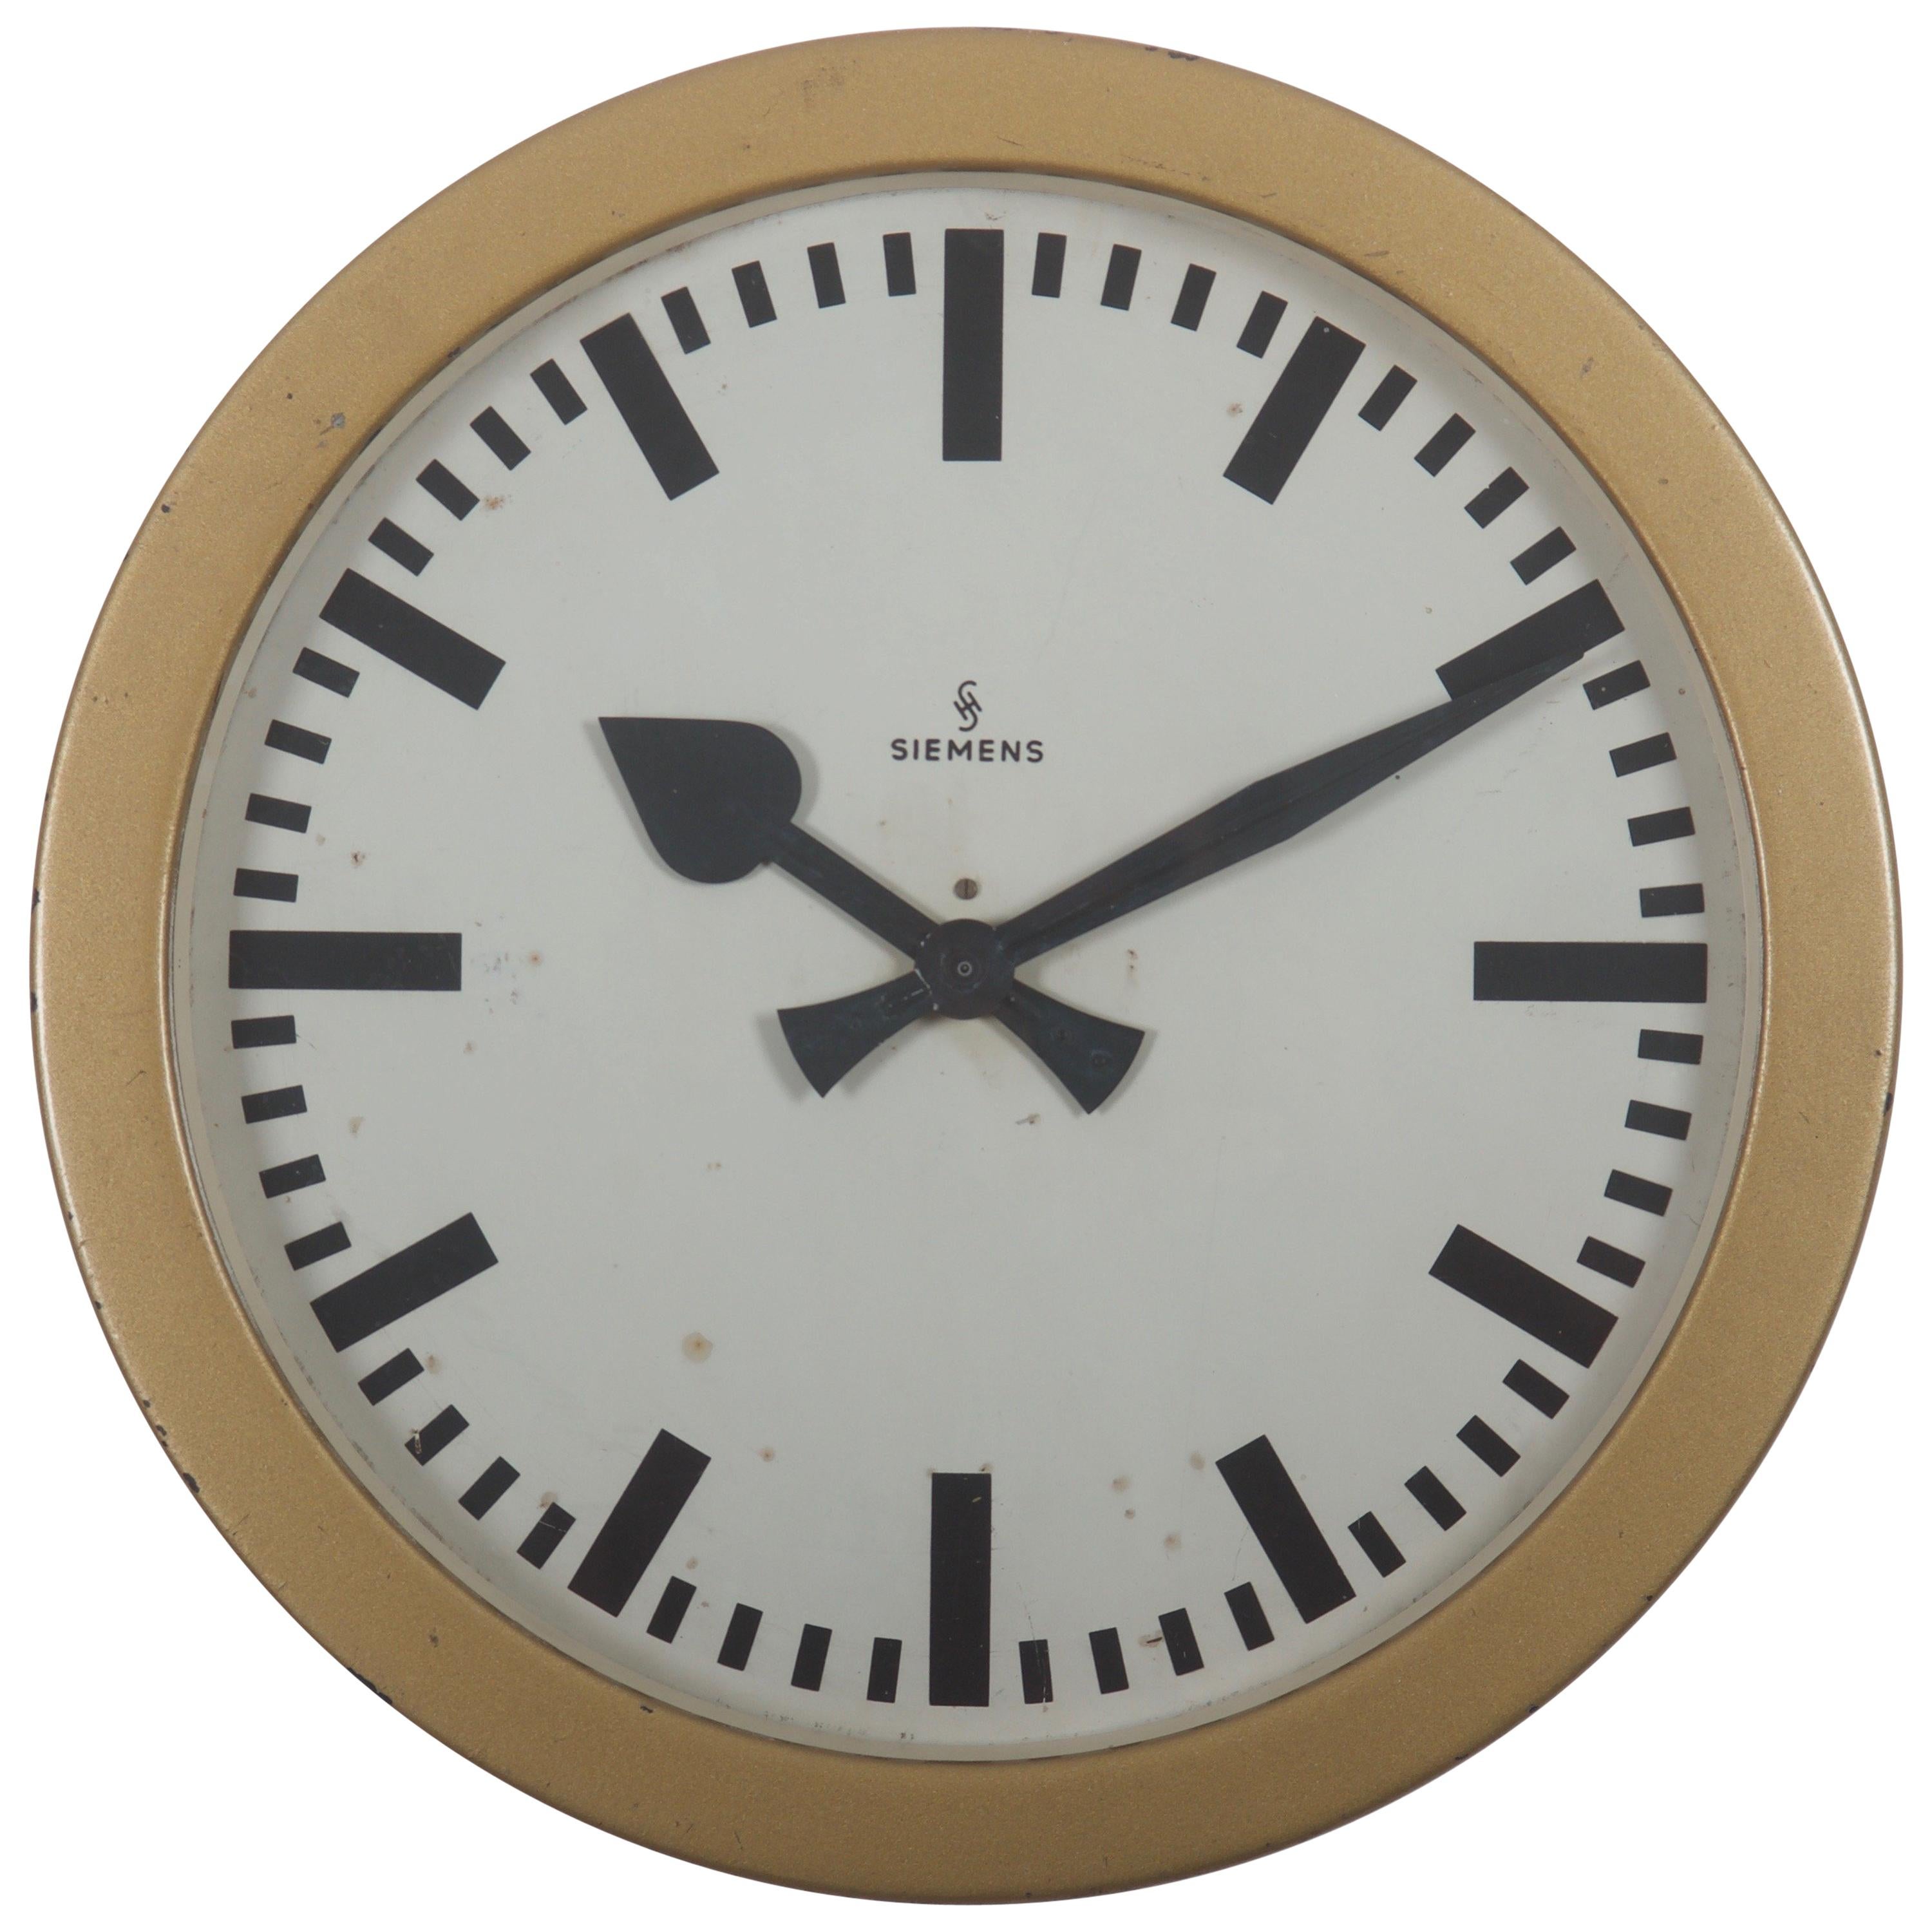 Siemens Halske Factory, Workshop or Train Station Clock